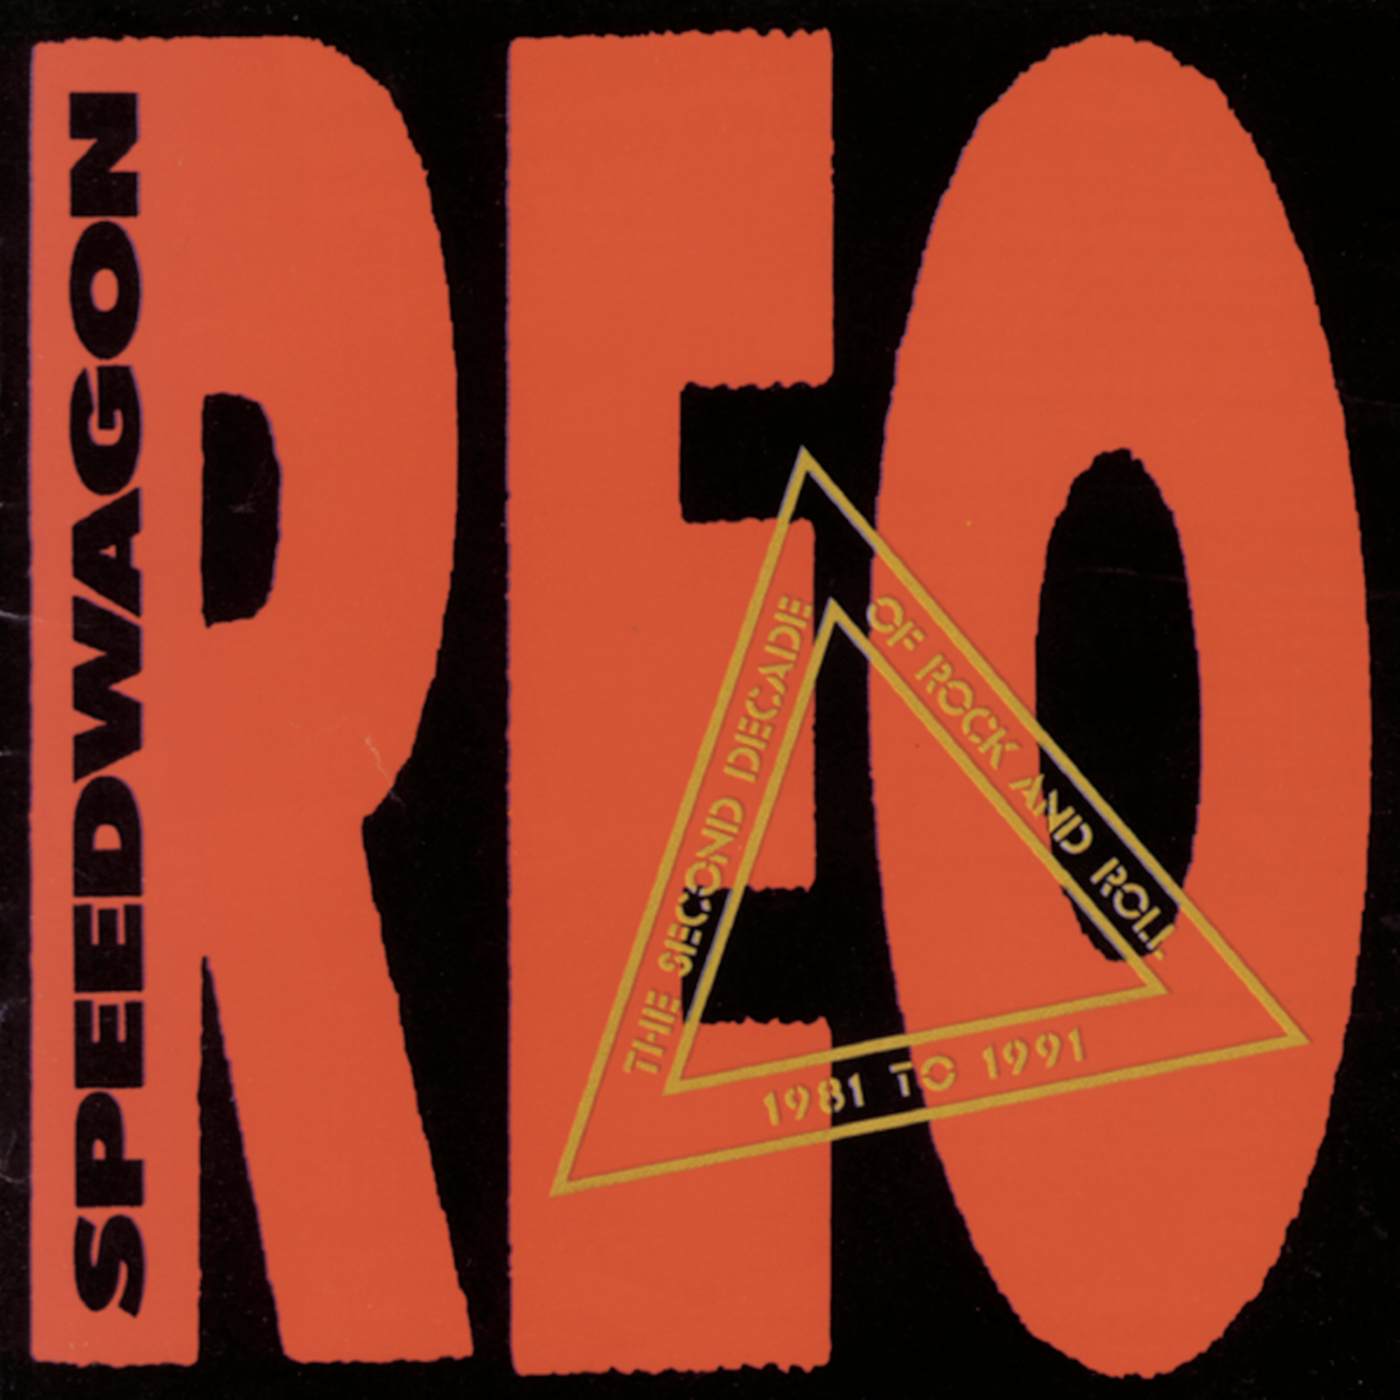 REO Speedwagon SECOND DECADE 81-91 CD